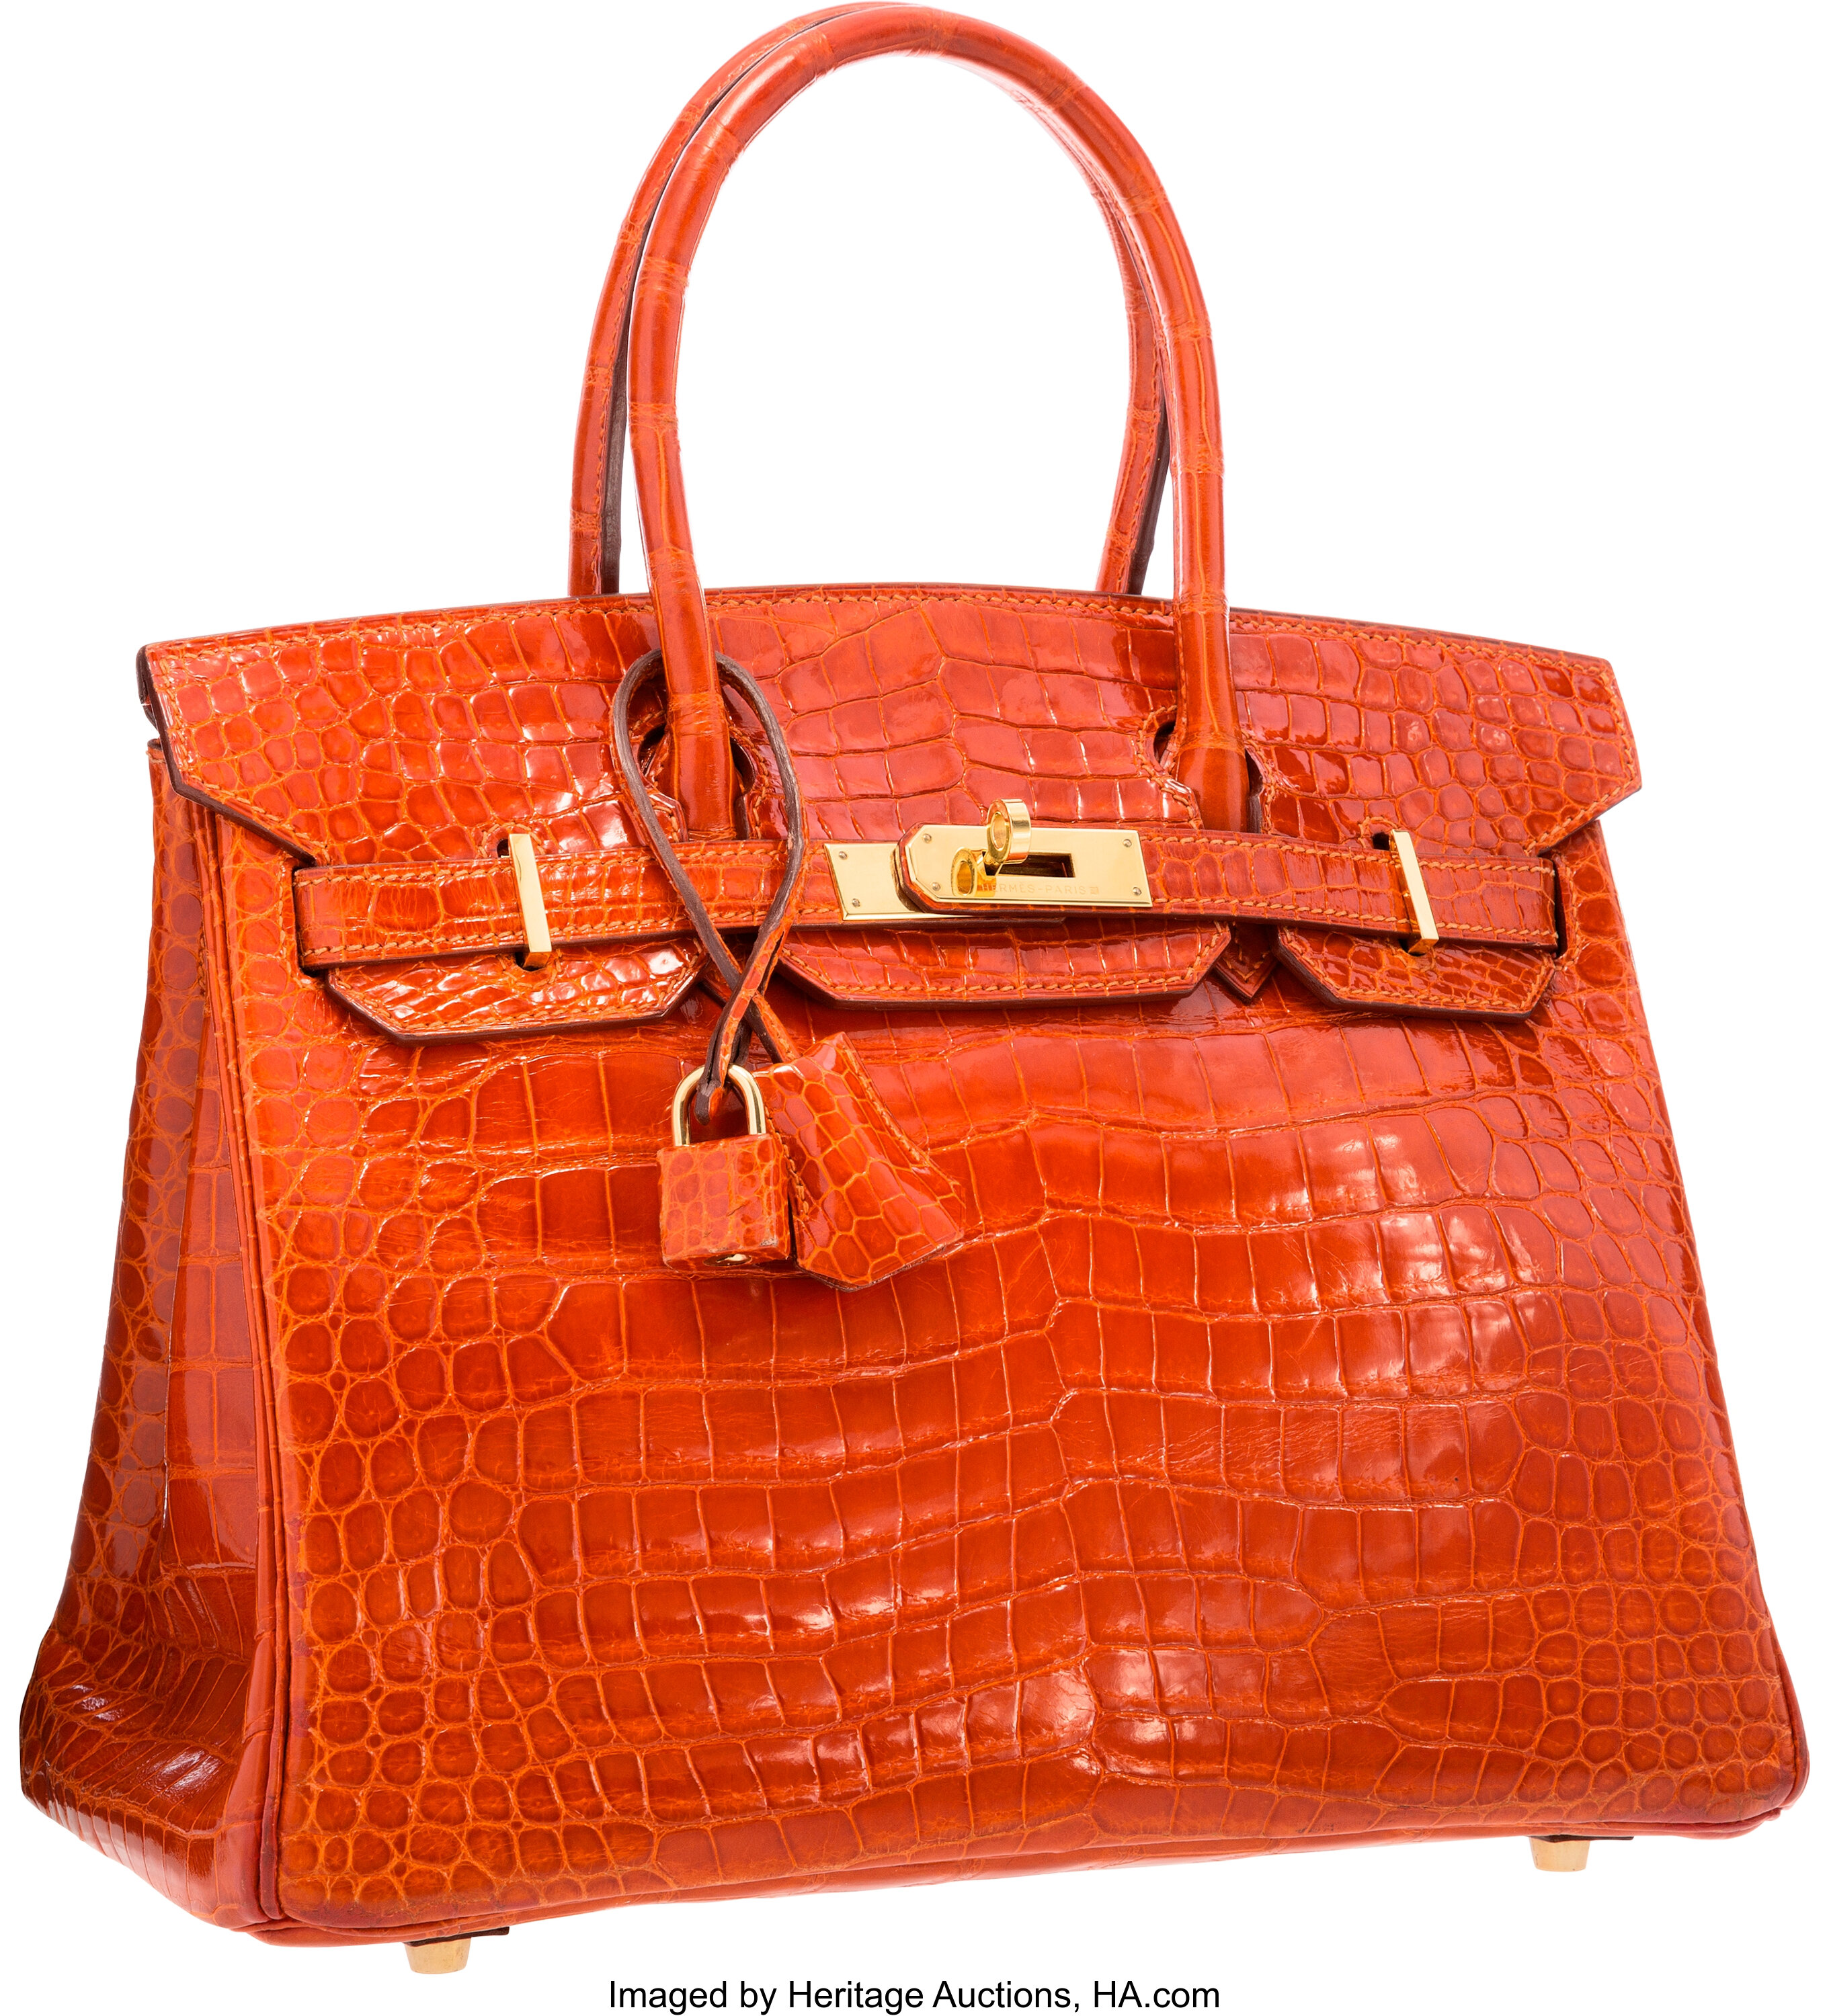 Hermes 30cm Shiny Orange H Porosus Crocodile Birkin Bag with Gold